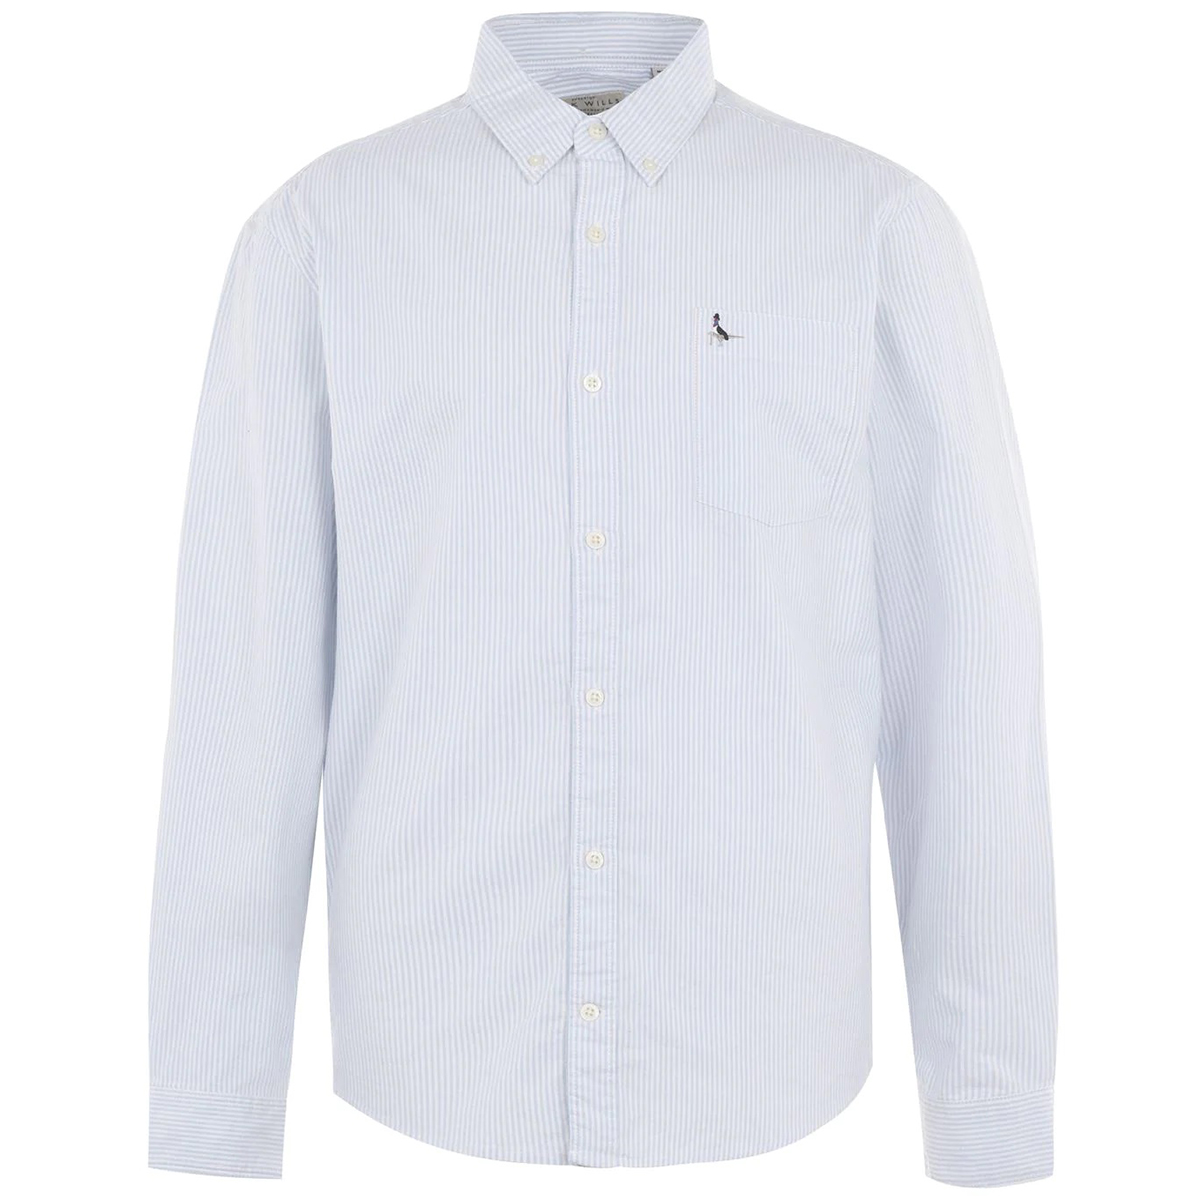 Jack Wills Men's Wadsworth Stripe Oxford Shirt